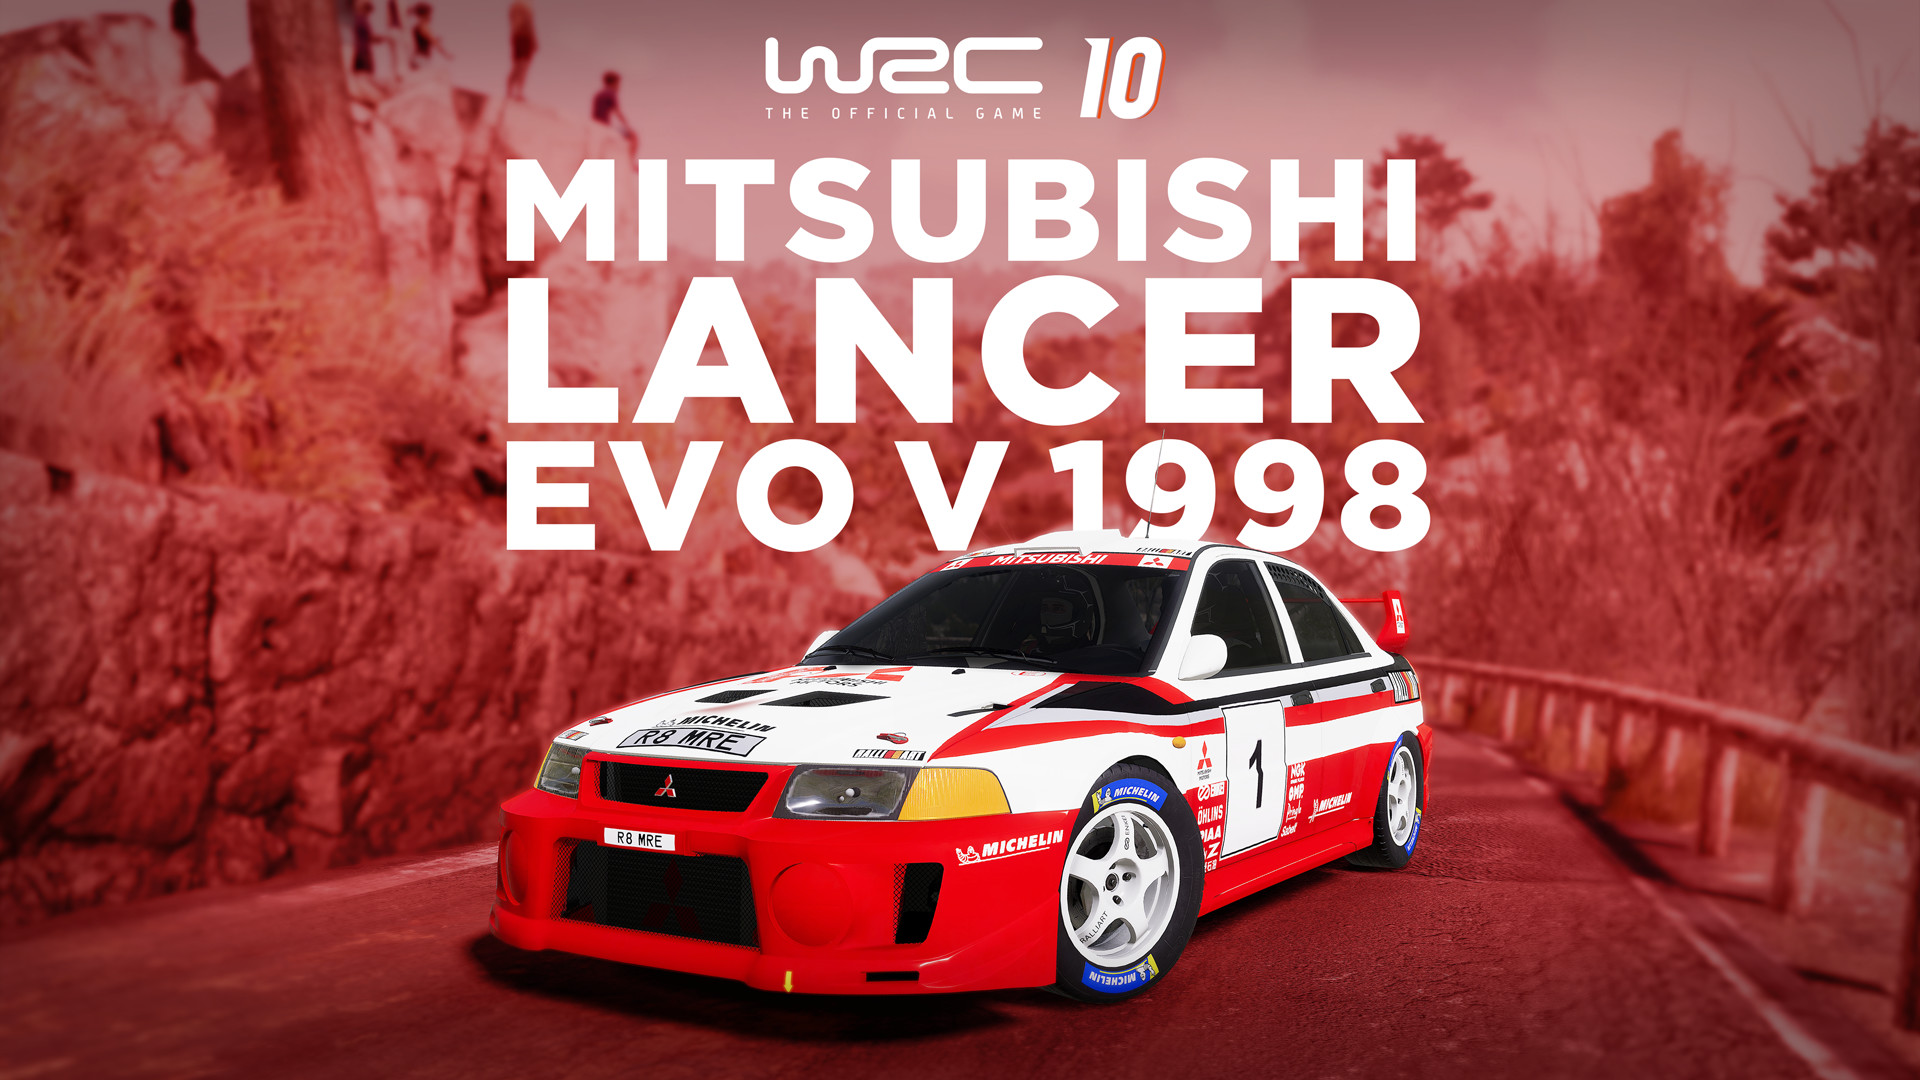 [$ 2.69] WRC 10 - Mitsubishi Lancer Evo V 1998 DLC Steam CD Key